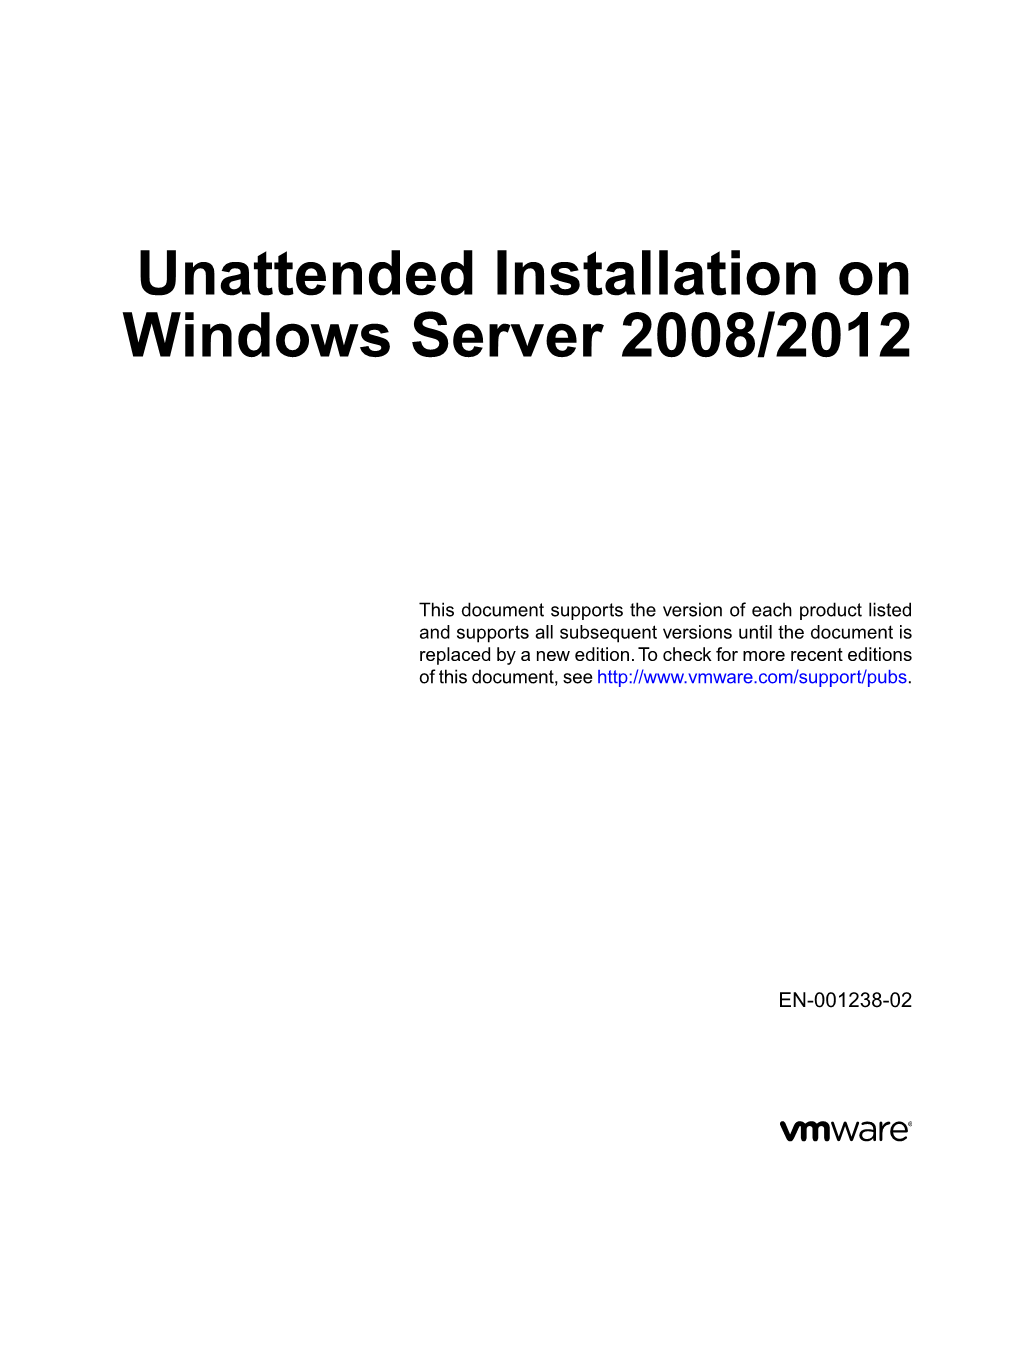 Unattended Installation on Windows Server 2008/2012